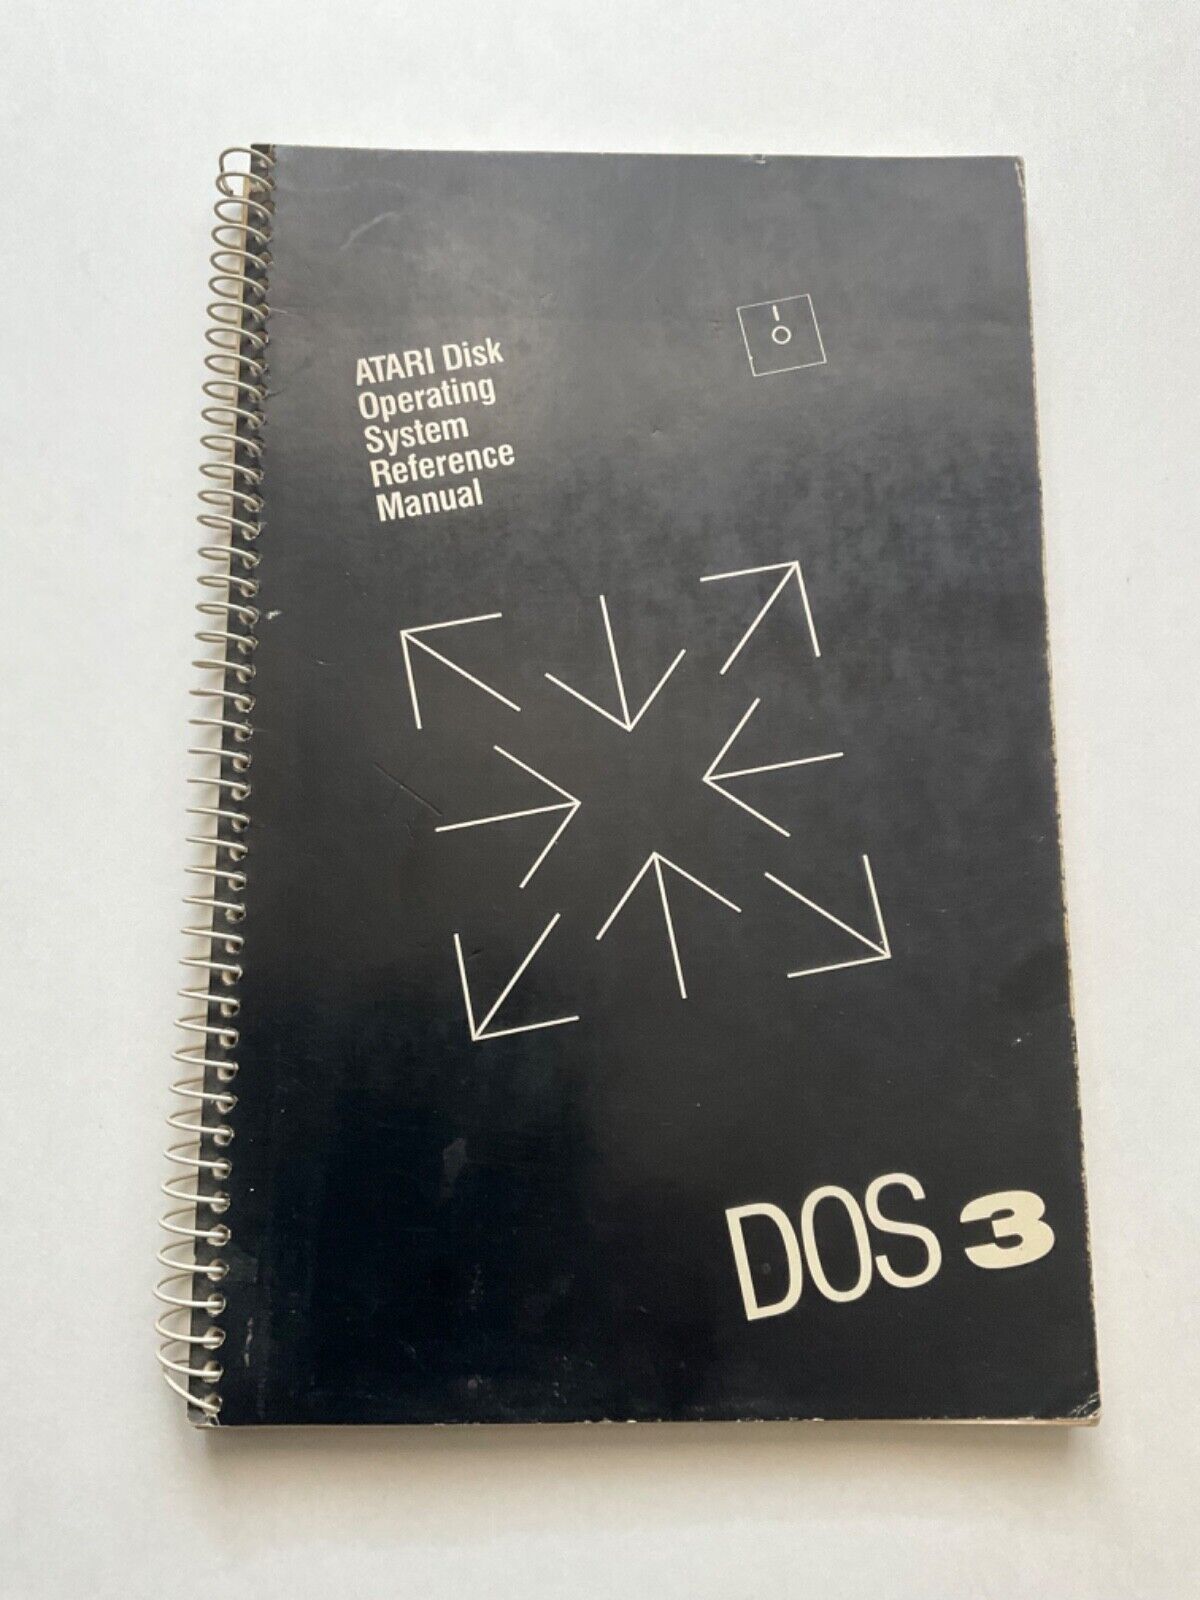 ATARI Disk Operating System Reference Manual DOS 3 Spiral Bound Vintage 1983